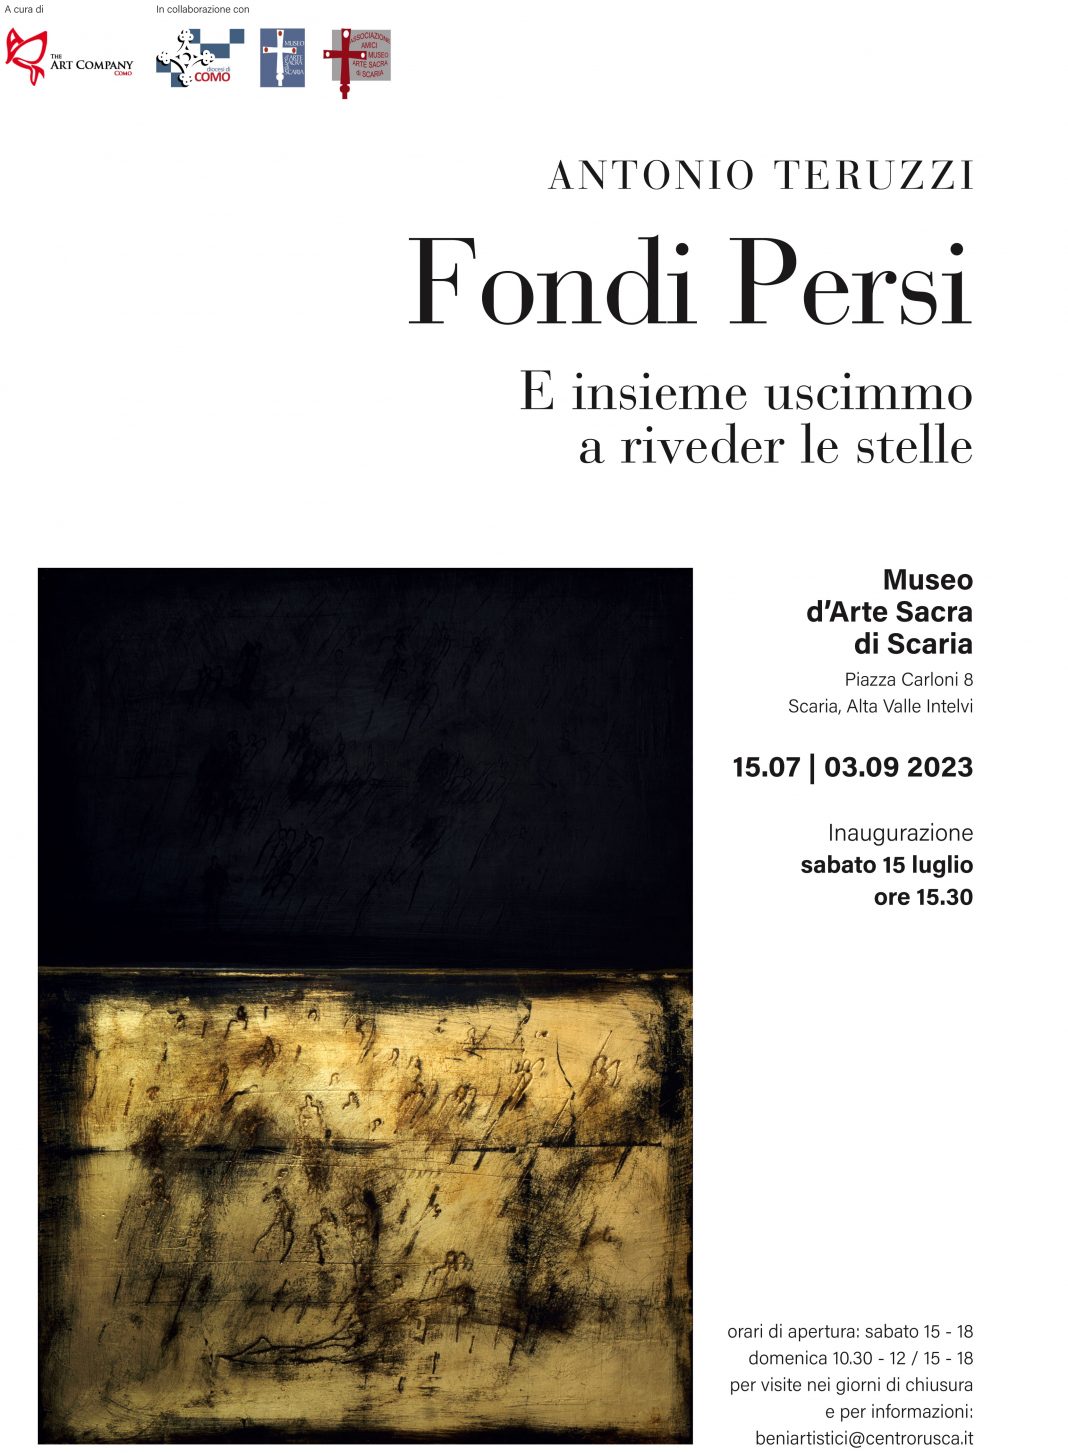 Antonio Teruzzi – Fondi Persi – E insieme uscimmo a riveder le stellehttps://www.exibart.com/repository/media/formidable/11/img/5f2/FONDI-PERSI_locandina-1068x1453.jpg